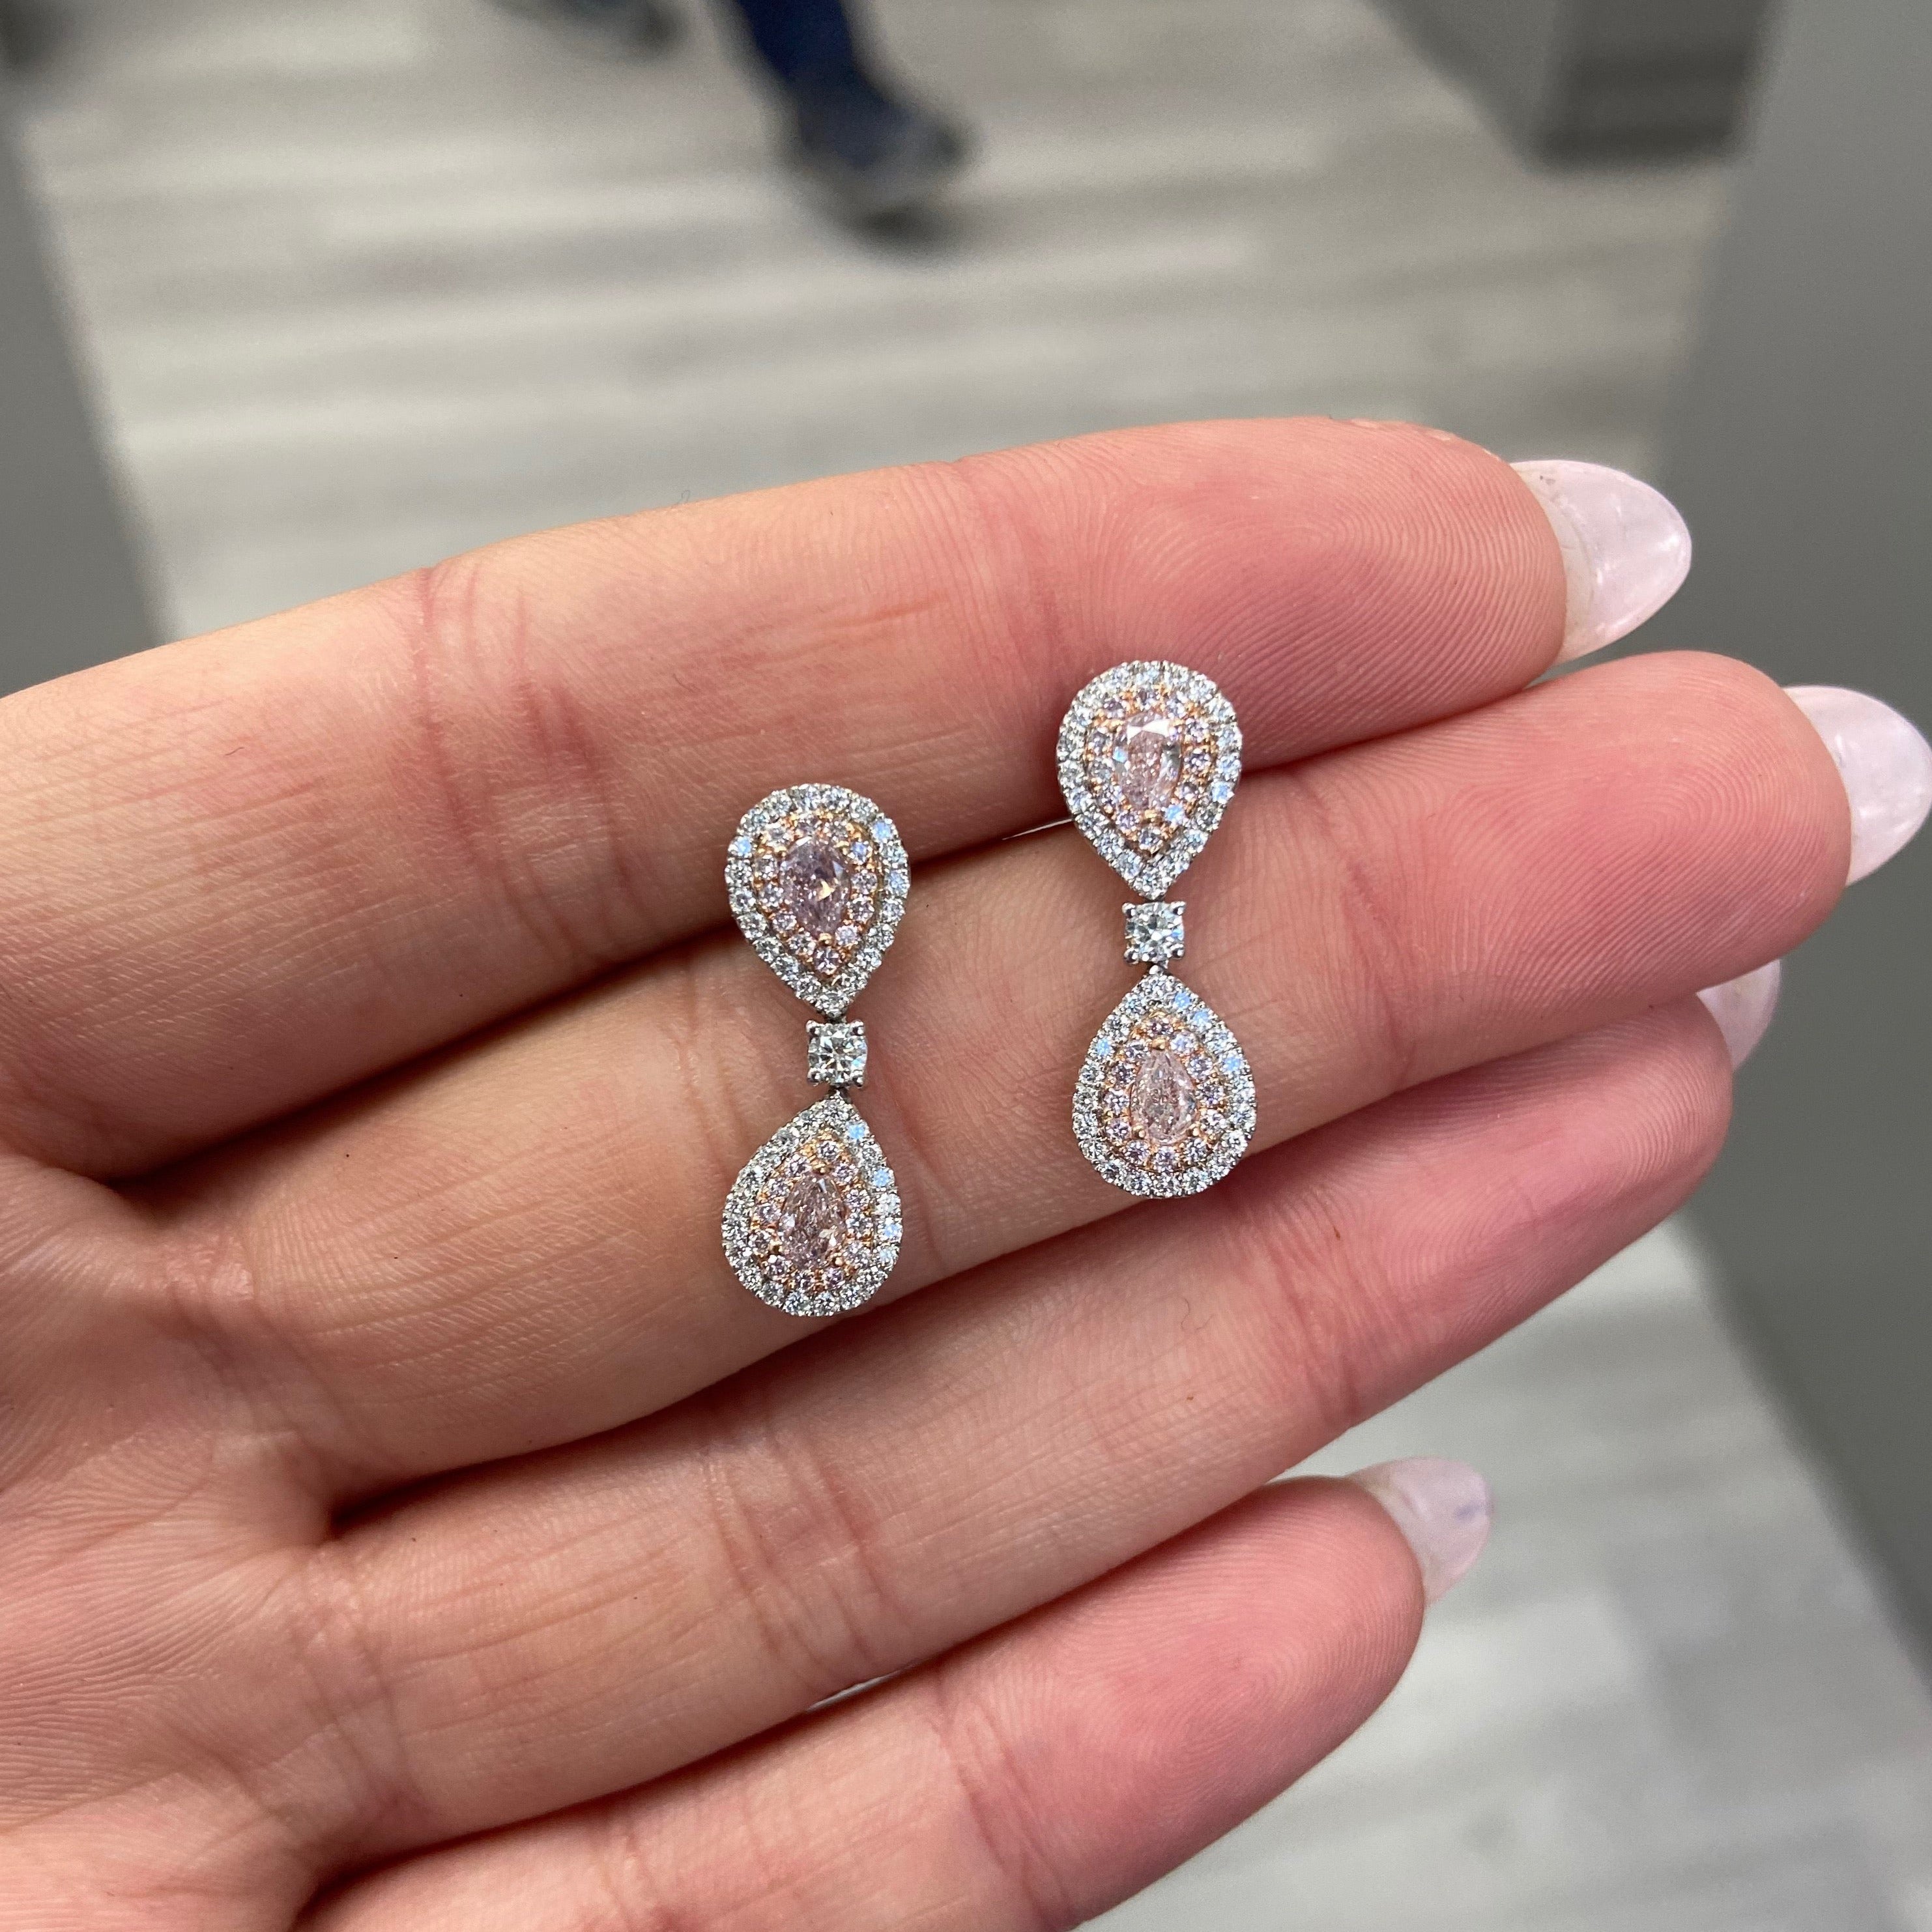 1.20ct Pink Pear Diamond Earrings